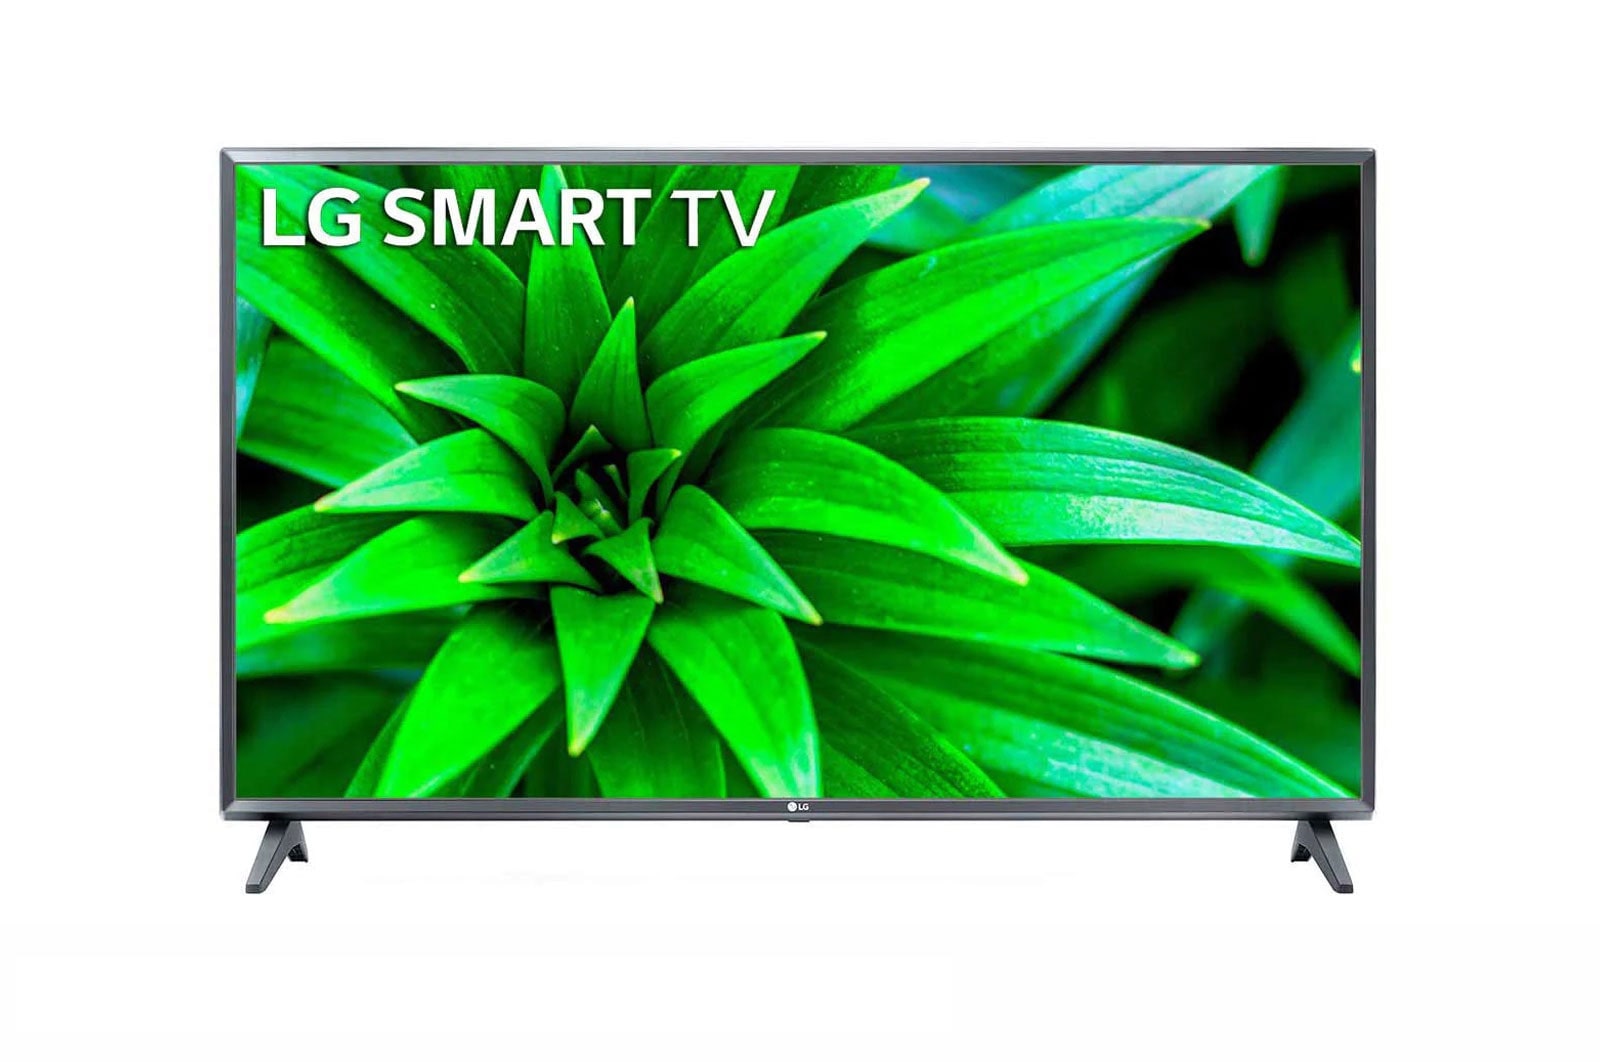 LG LM56 43 (108.22cm) FHD TV - 43LM5620PTA | LG IN